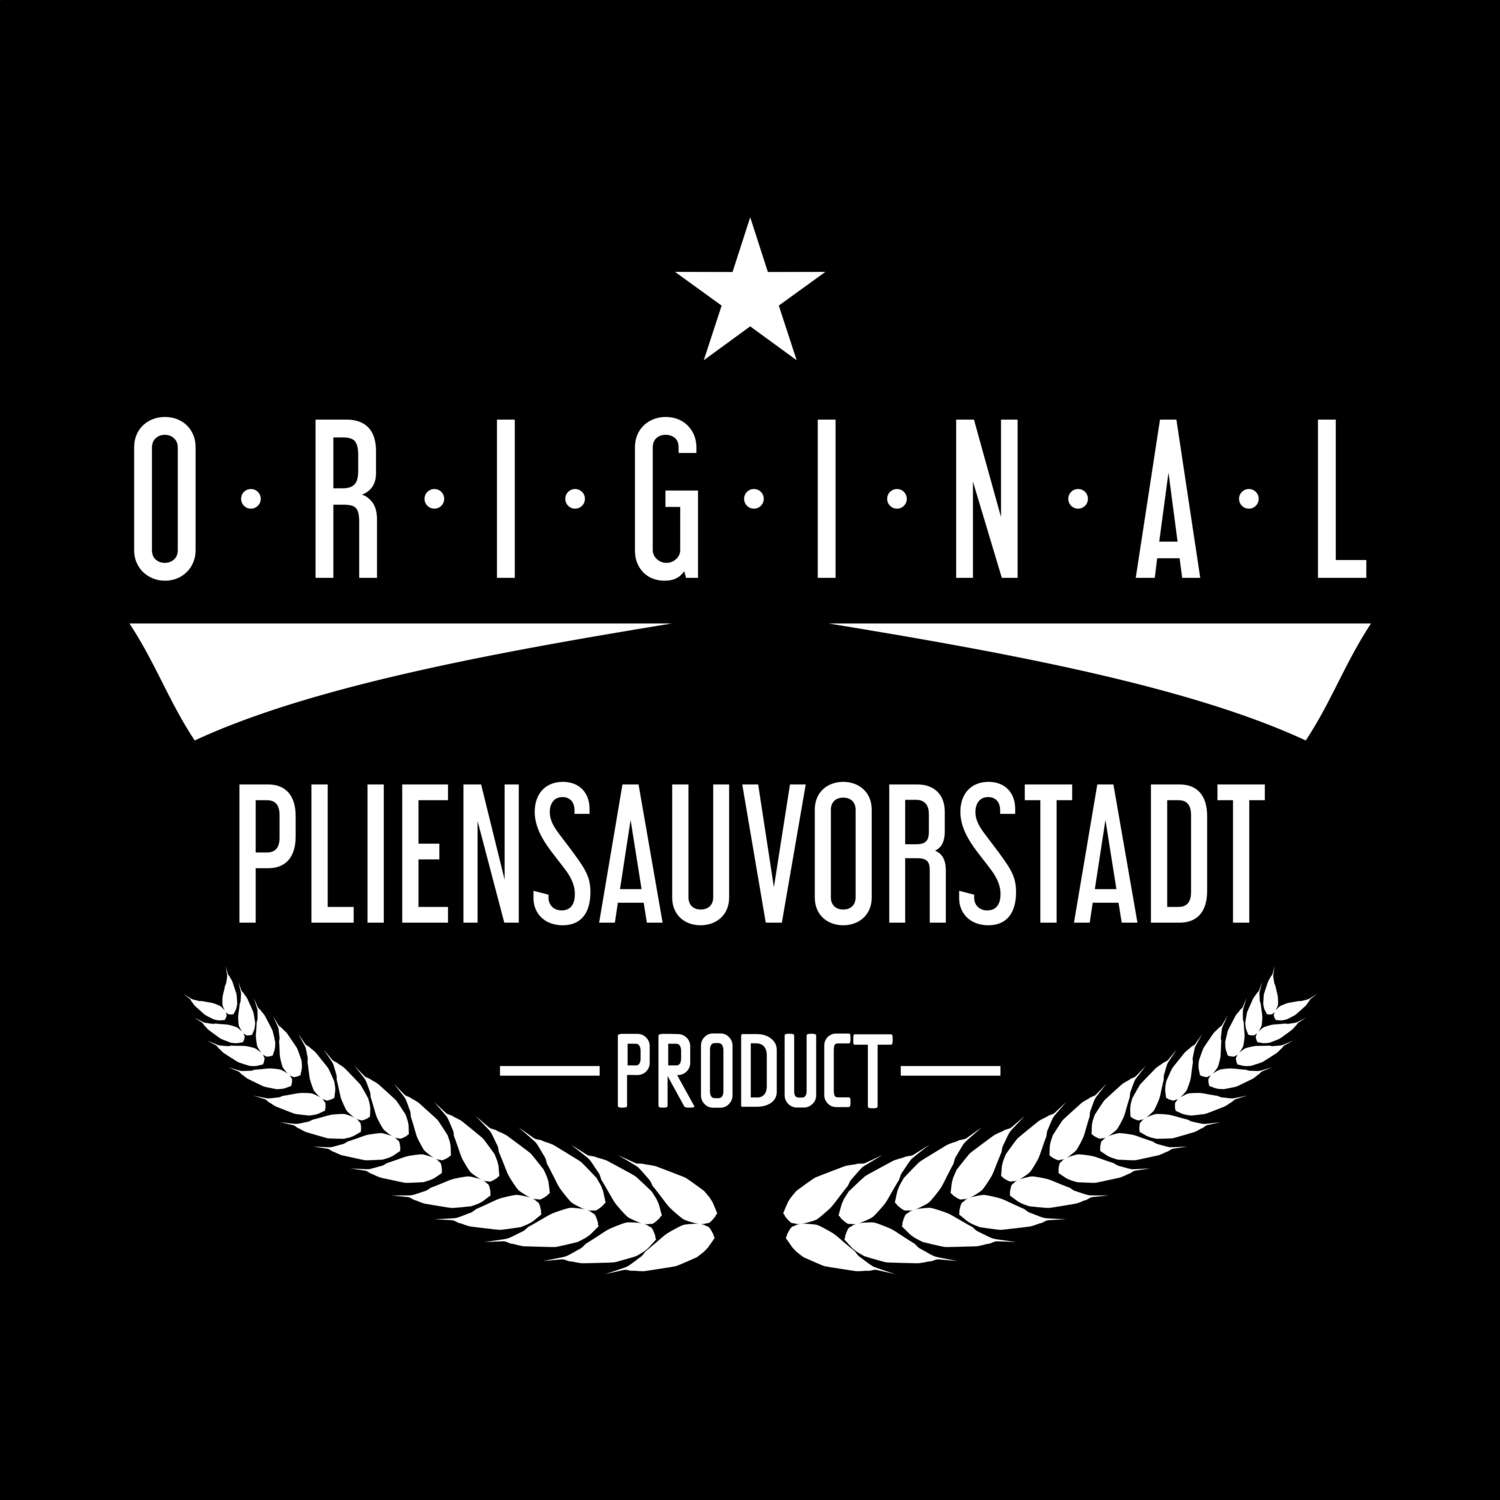 Pliensauvorstadt T-Shirt »Original Product«